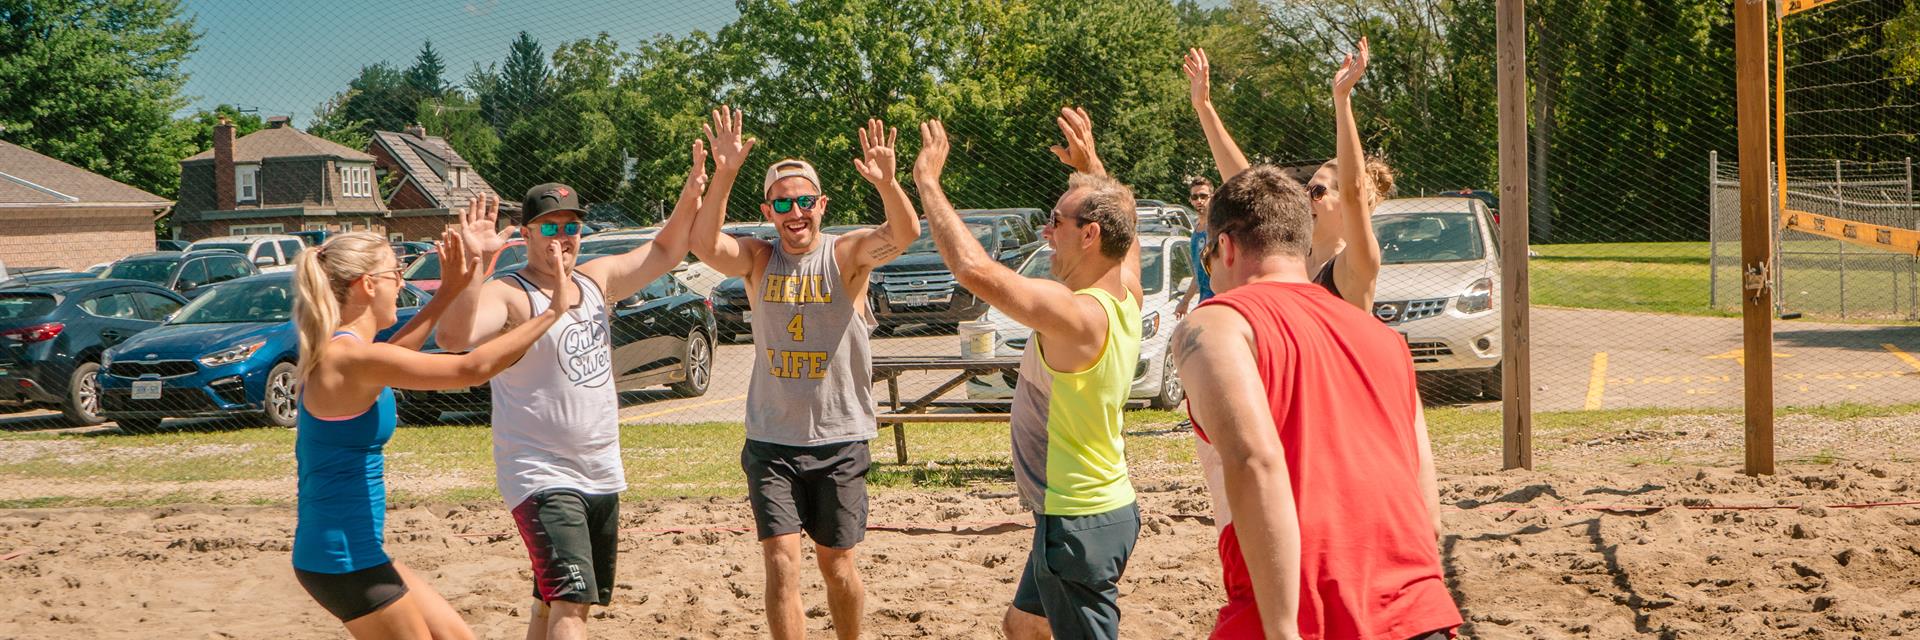 Beach volleyball team giving a group high five.